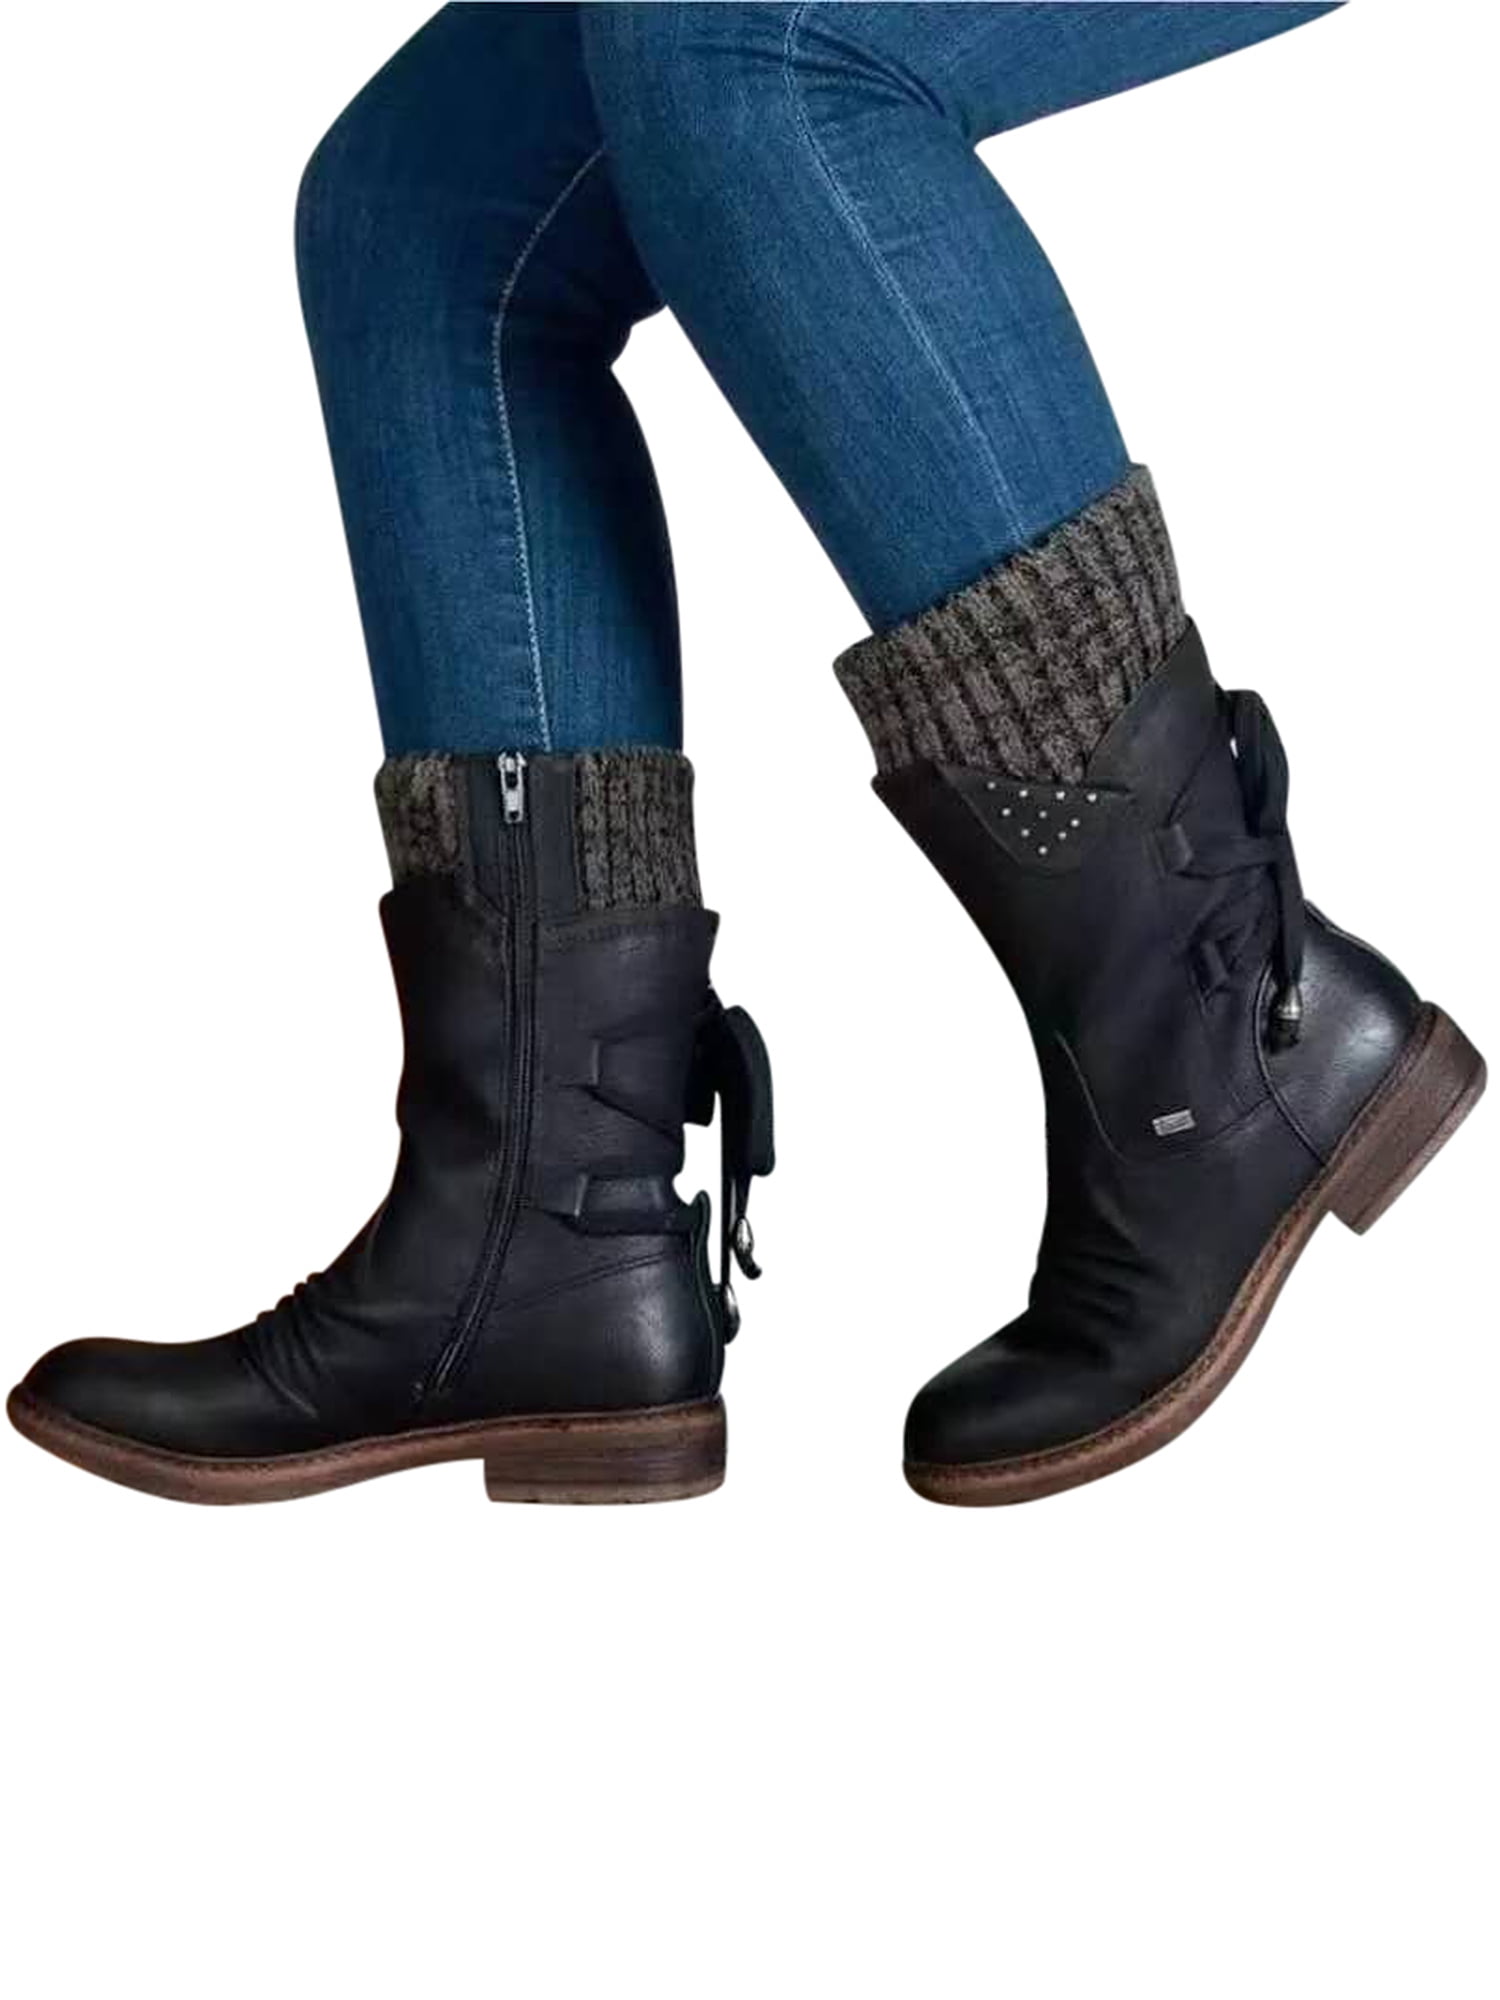 Women's Plush Winter Boots Tasseled Mid-Calf Warm Cozy Black Brown Size 5-10 New 